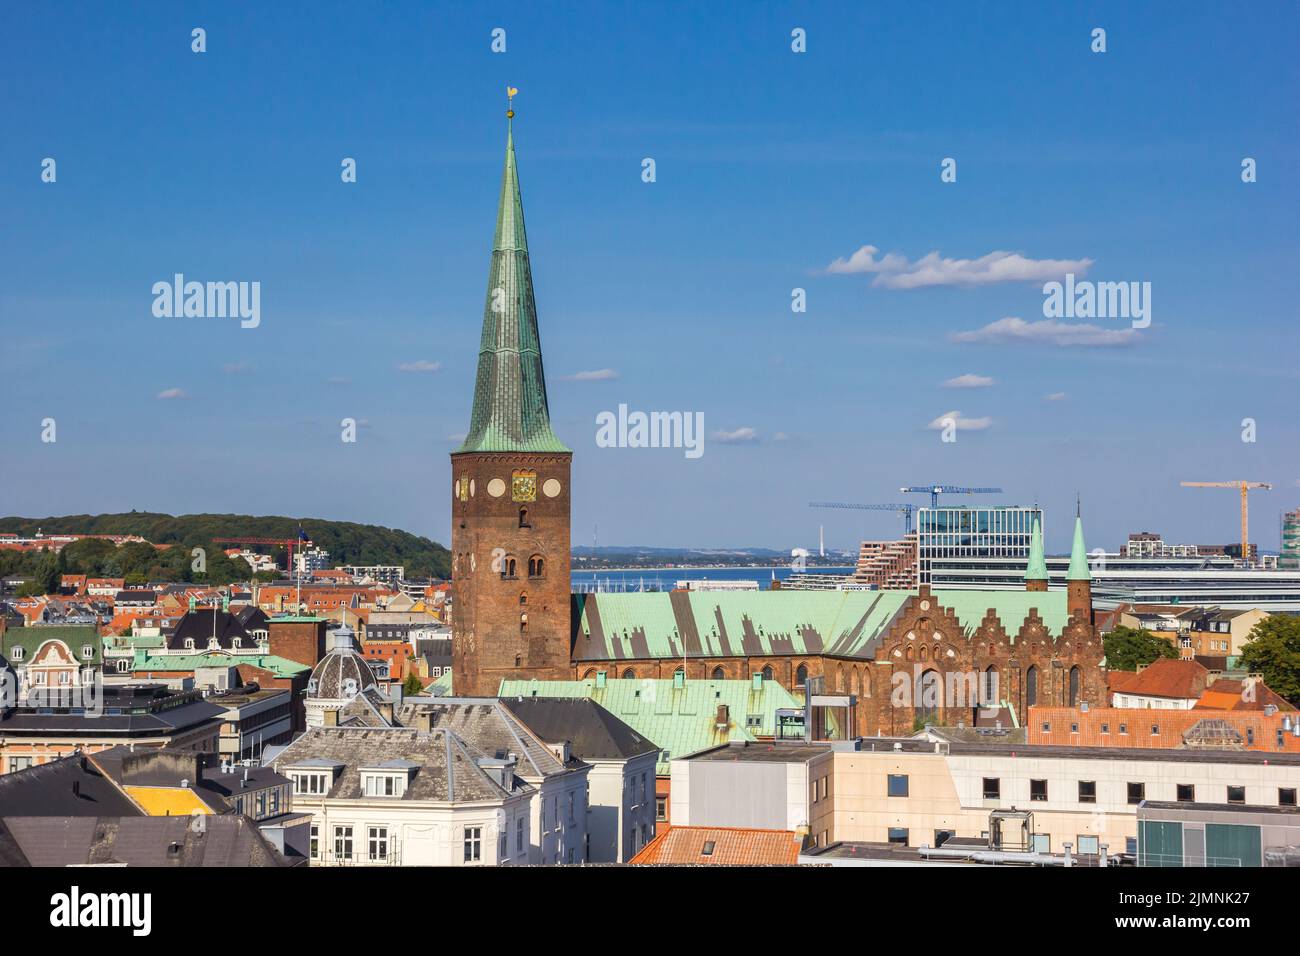 Tower of the historic Domkirke church in the skyline of Aarhus, Denmark Stock Photo